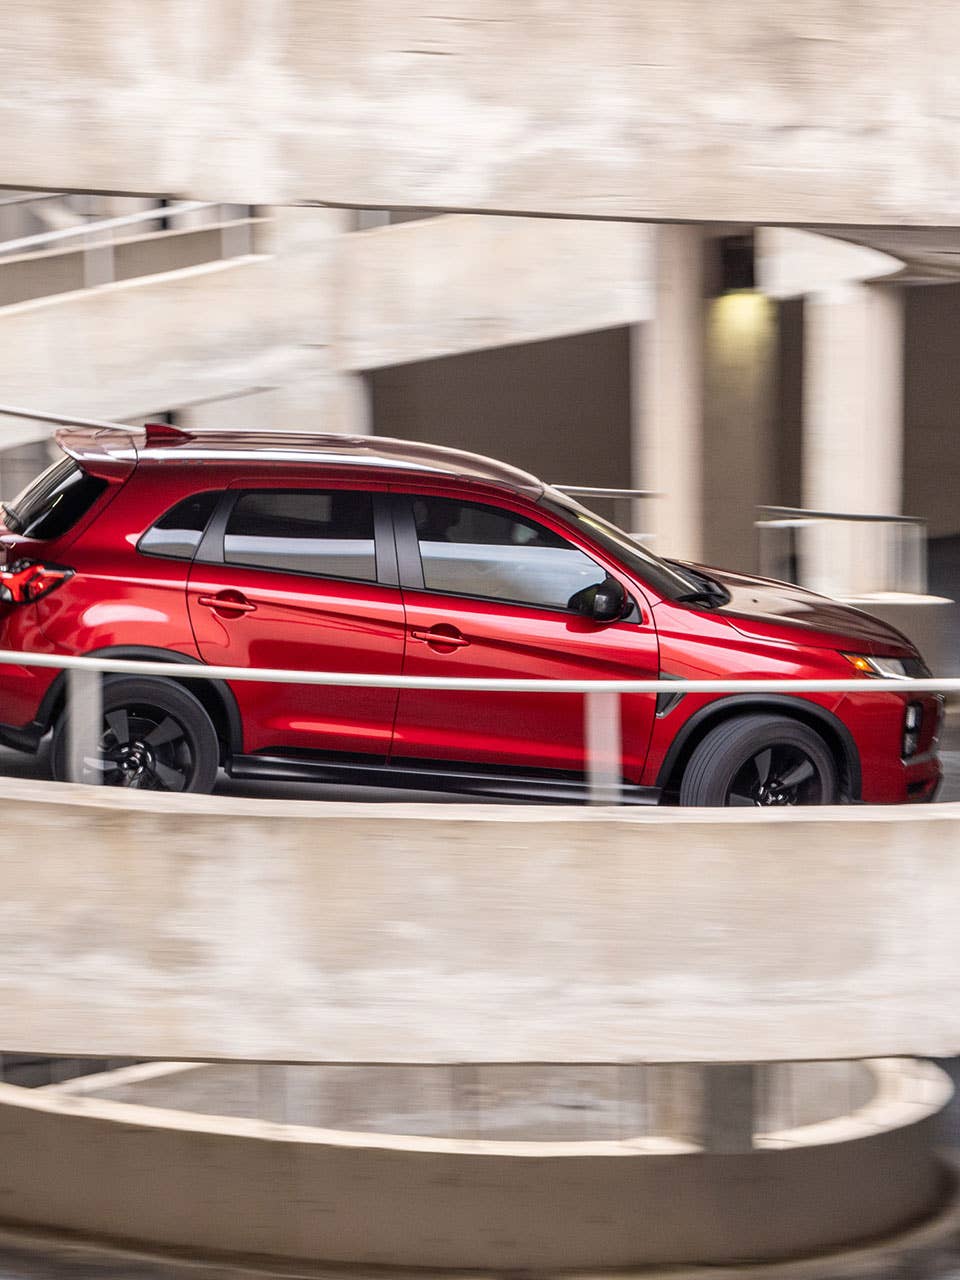 2015 Mitsubishi Outlander Sport SUV: Latest Prices, Reviews, Specs